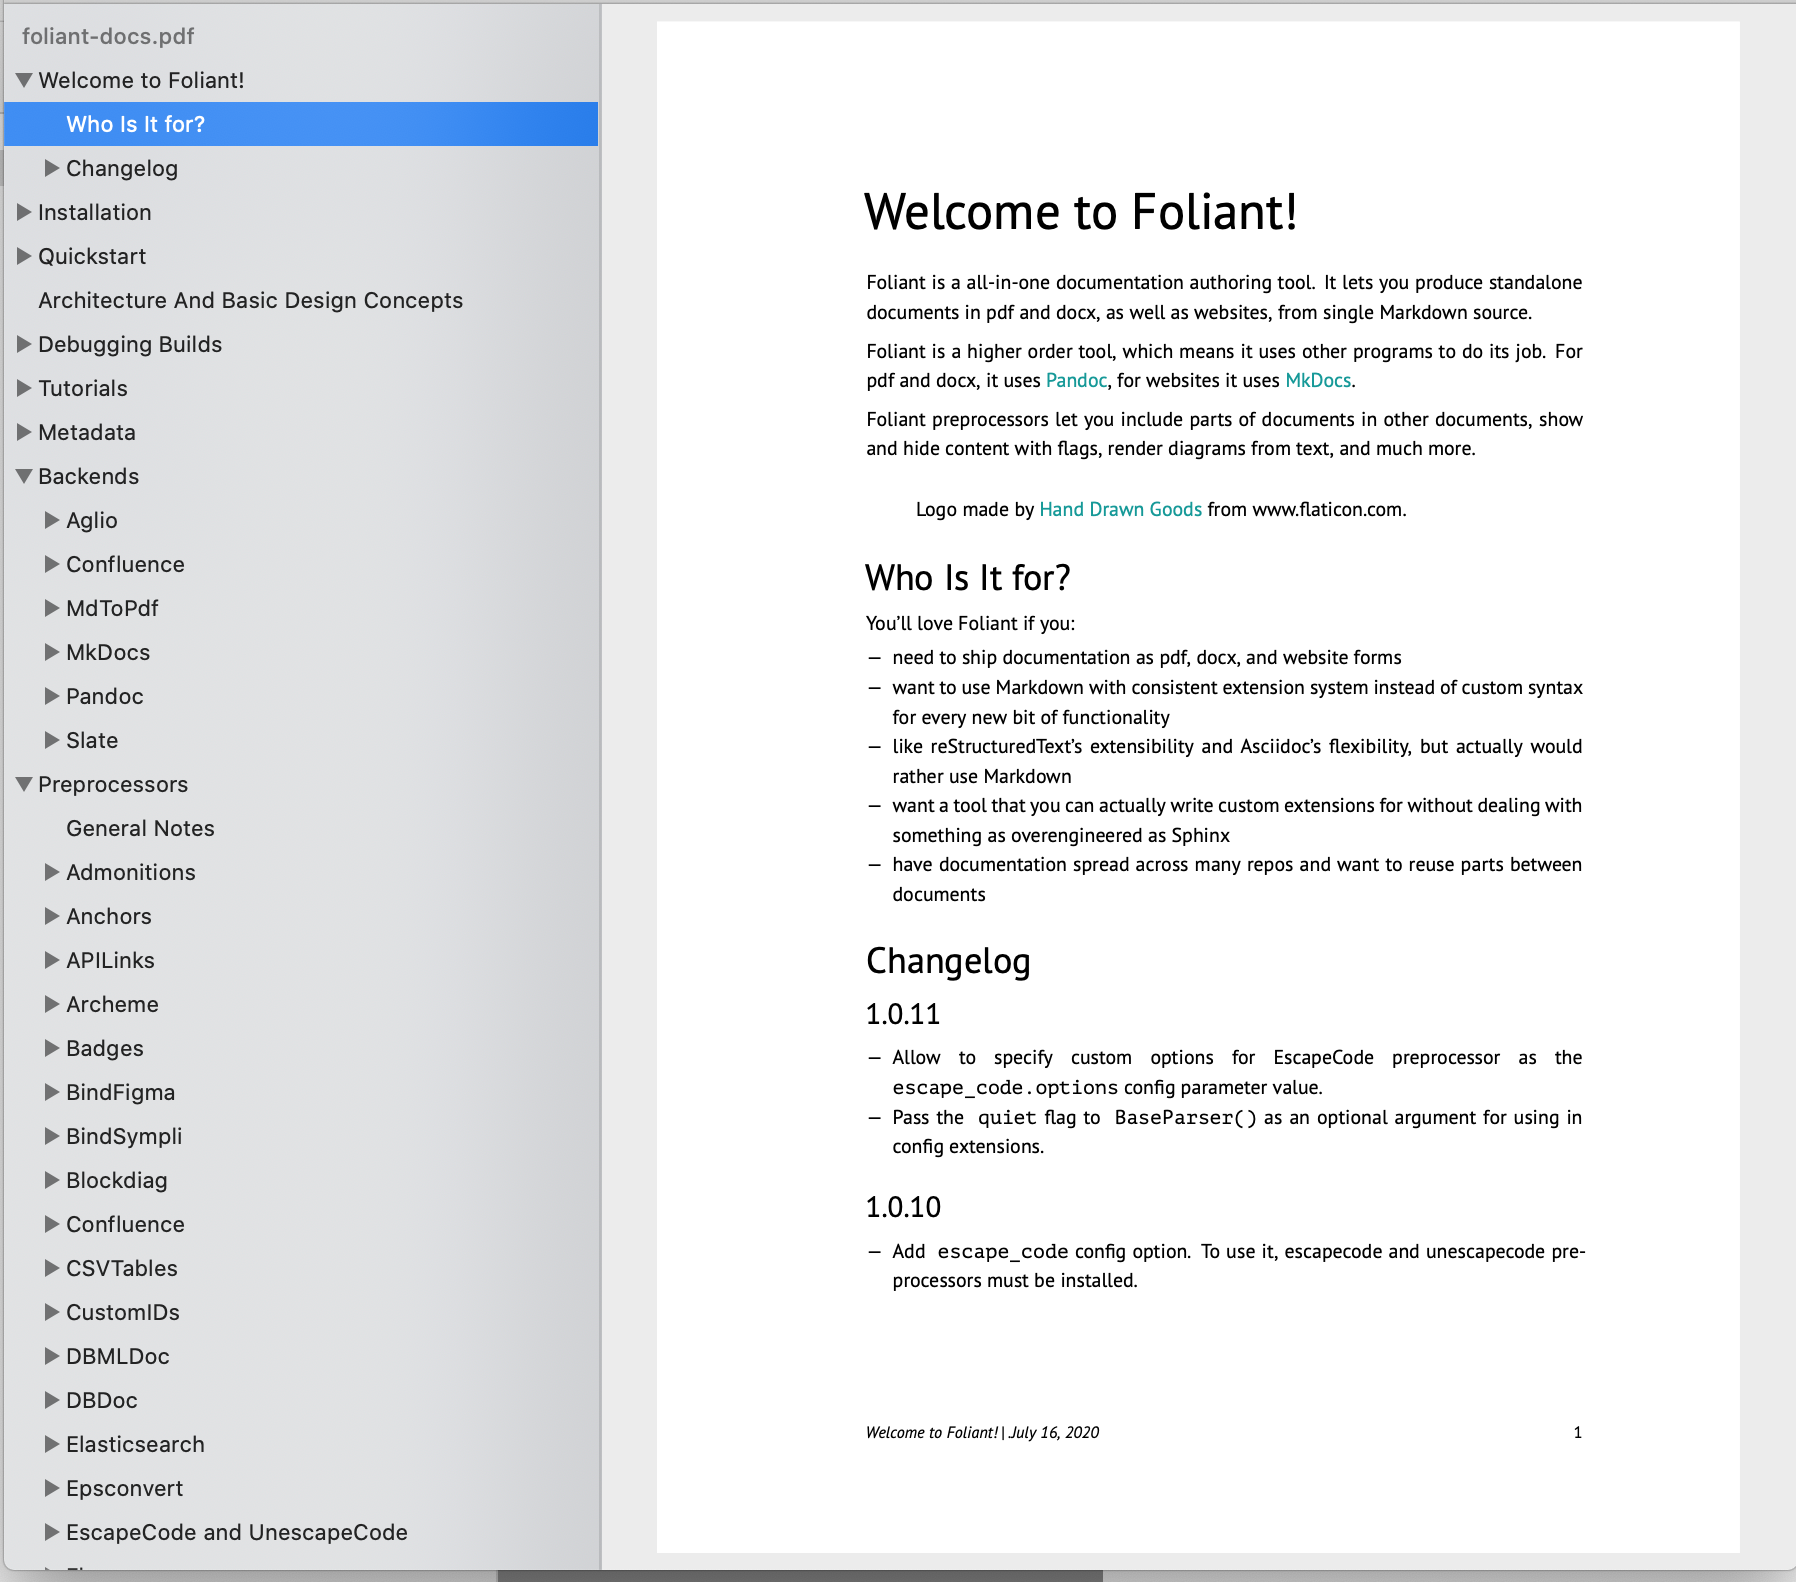 PDF built with Foliant